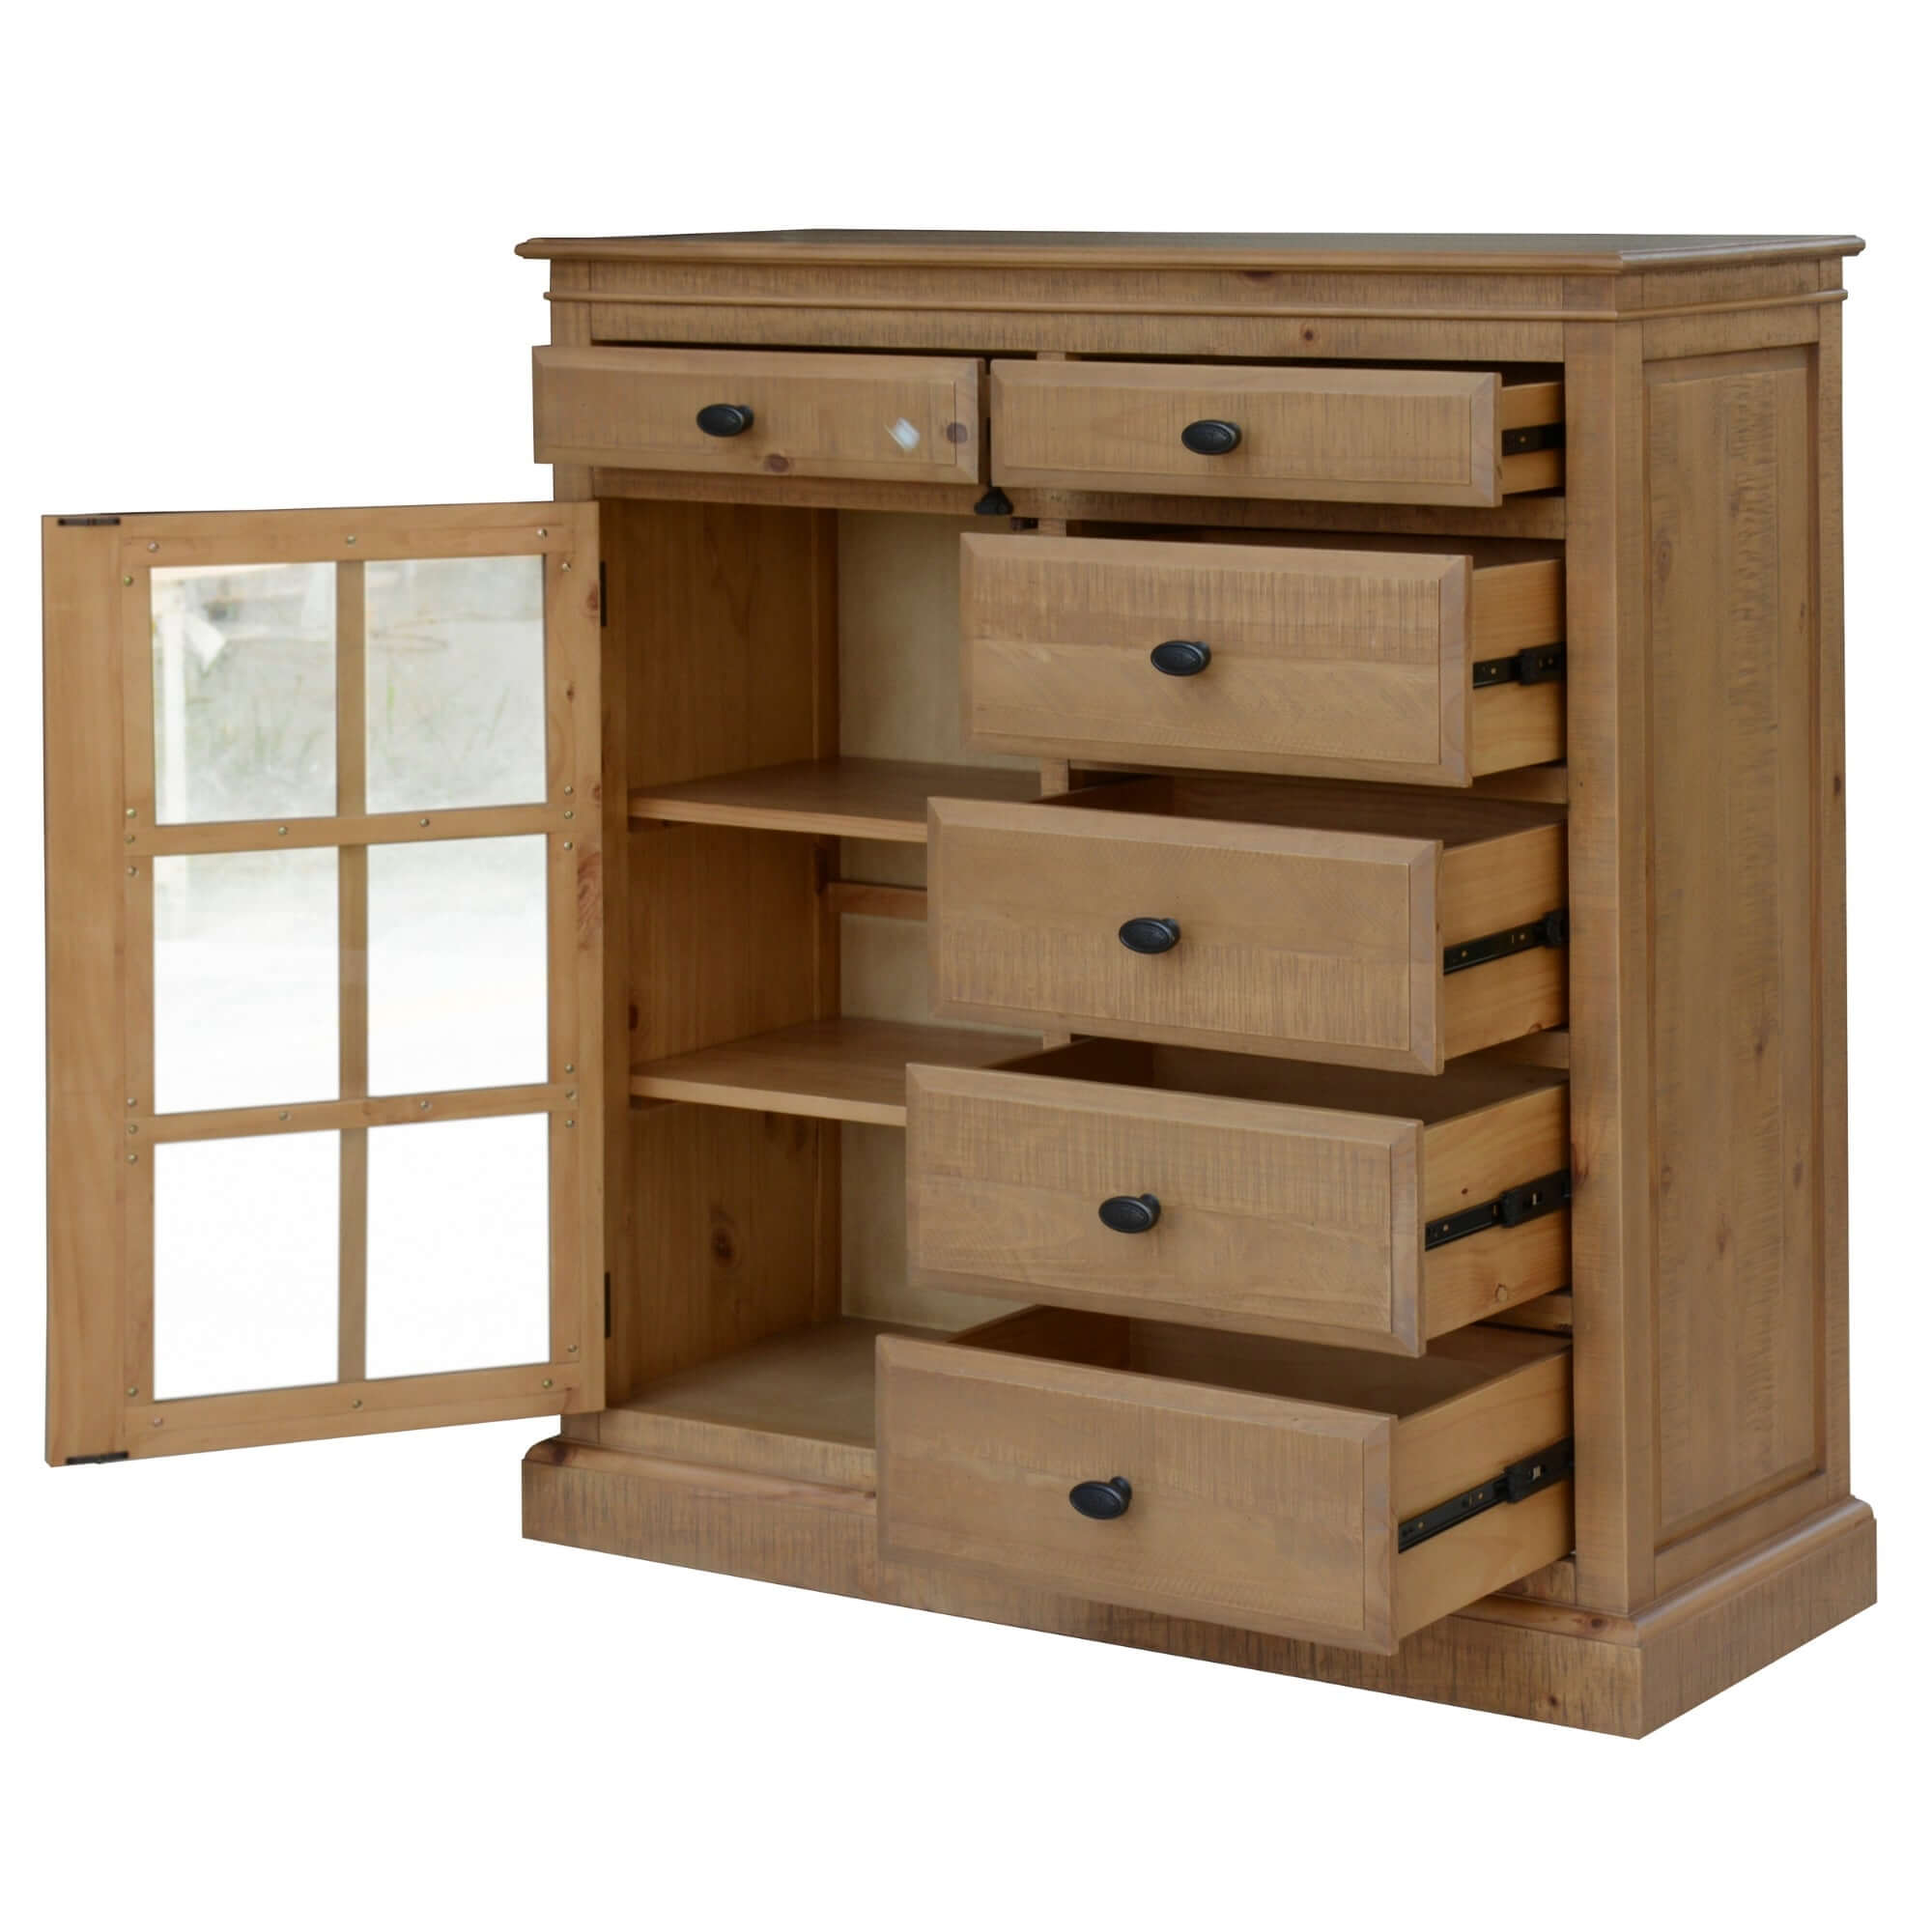 Jade Tallboy French Style Storage Cabinet – Natural-Upinteriors